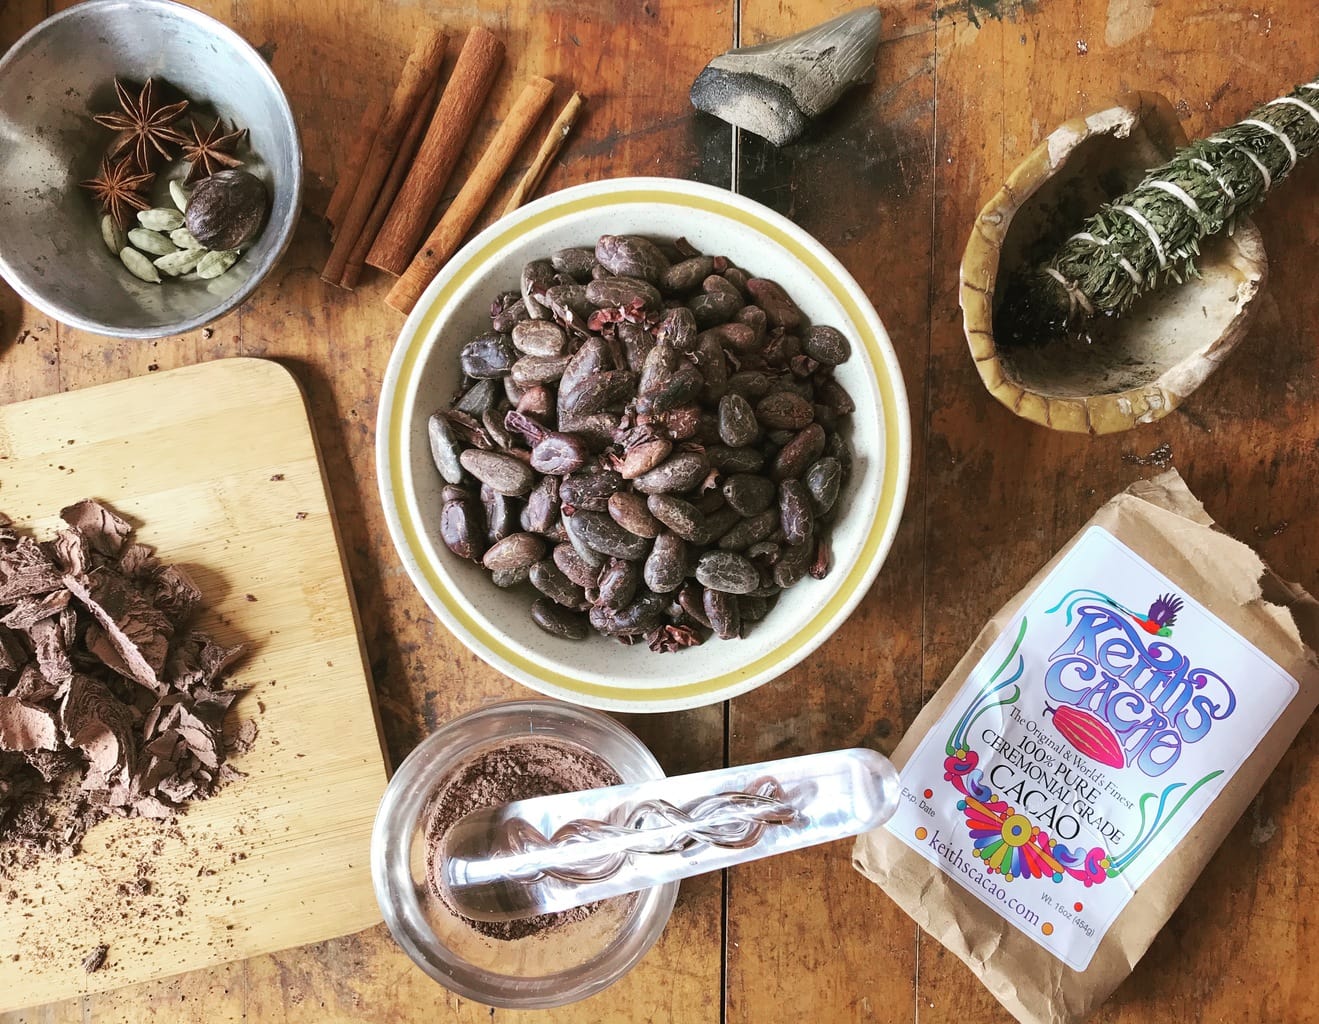 How to prepare Cacao